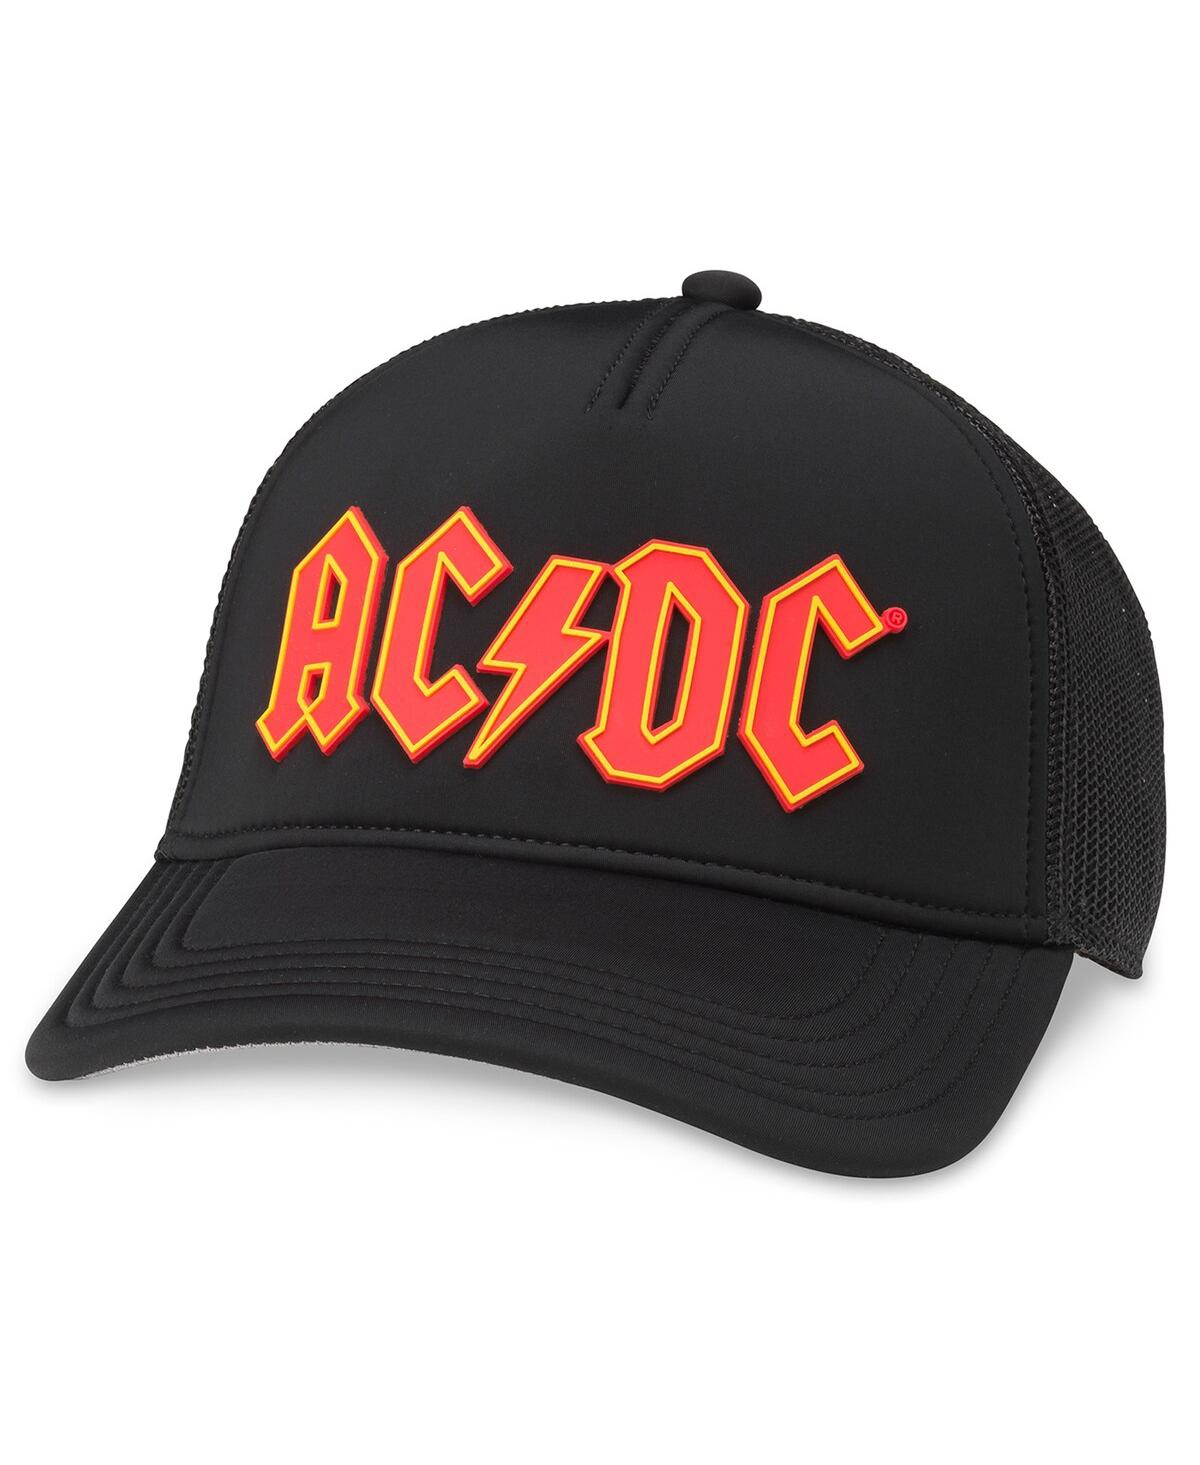 American Needle Men's  Black Ac/dc Riptide Valin Trucker Adjustable Hat